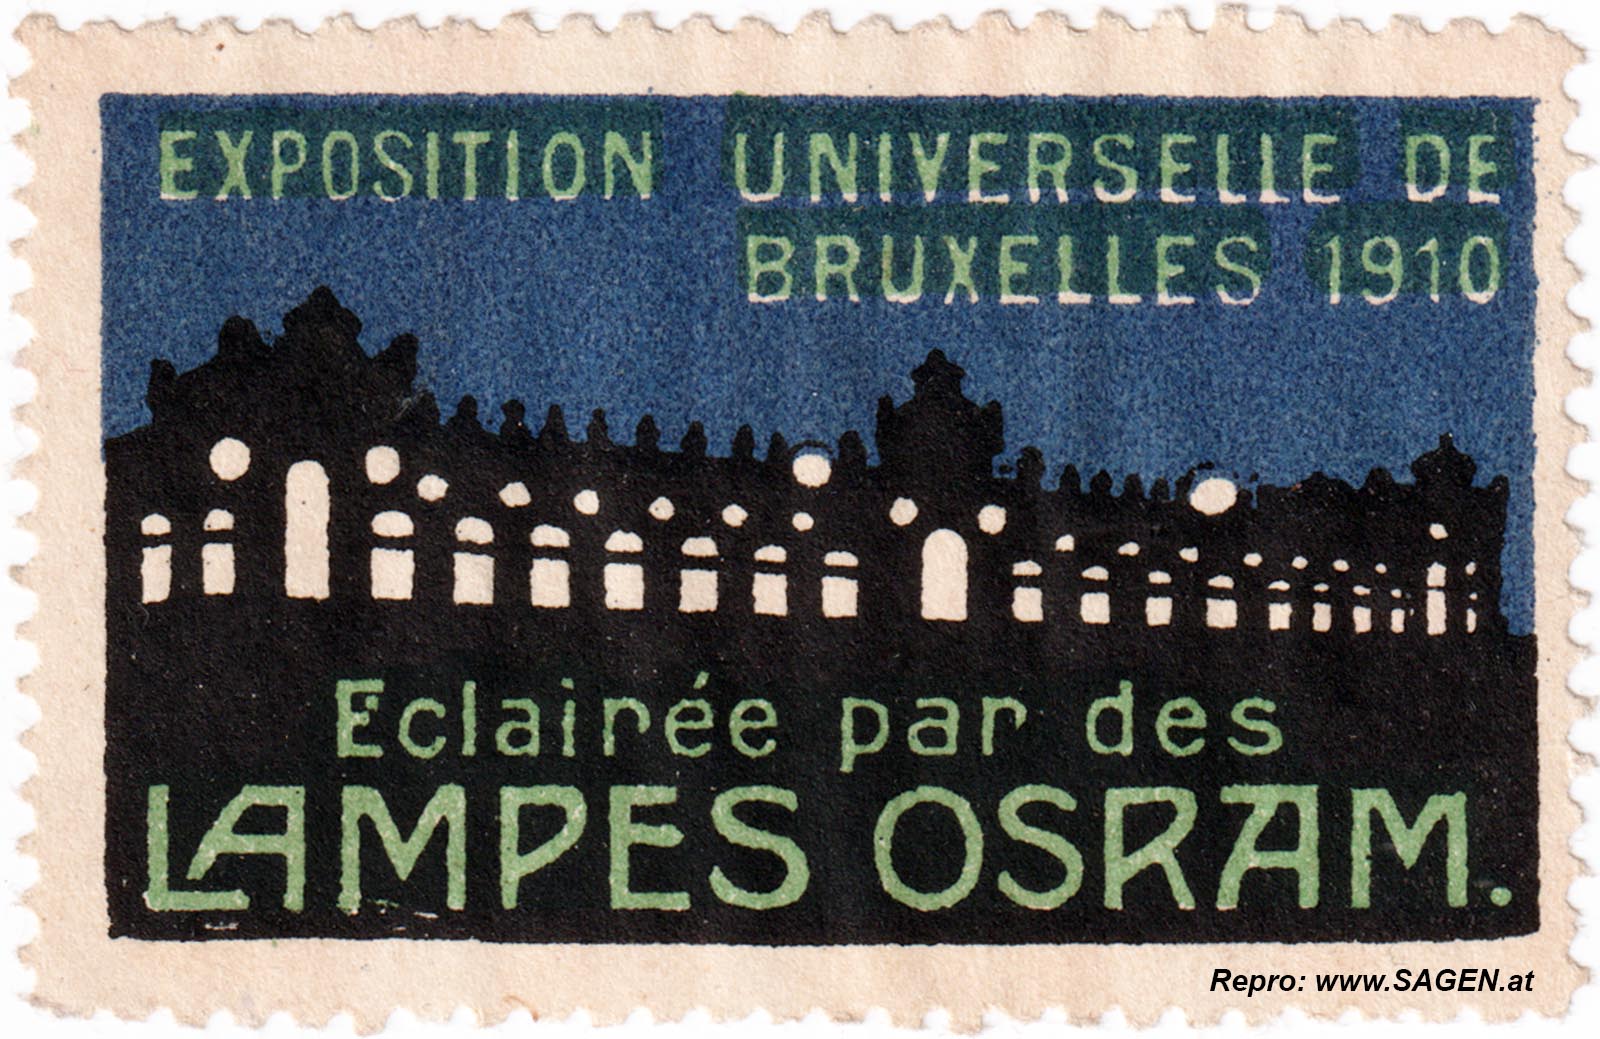 Reklamemarke Brüsseler Weltausstellung 1910 beleuchtet durch Osram-Glühbirnen